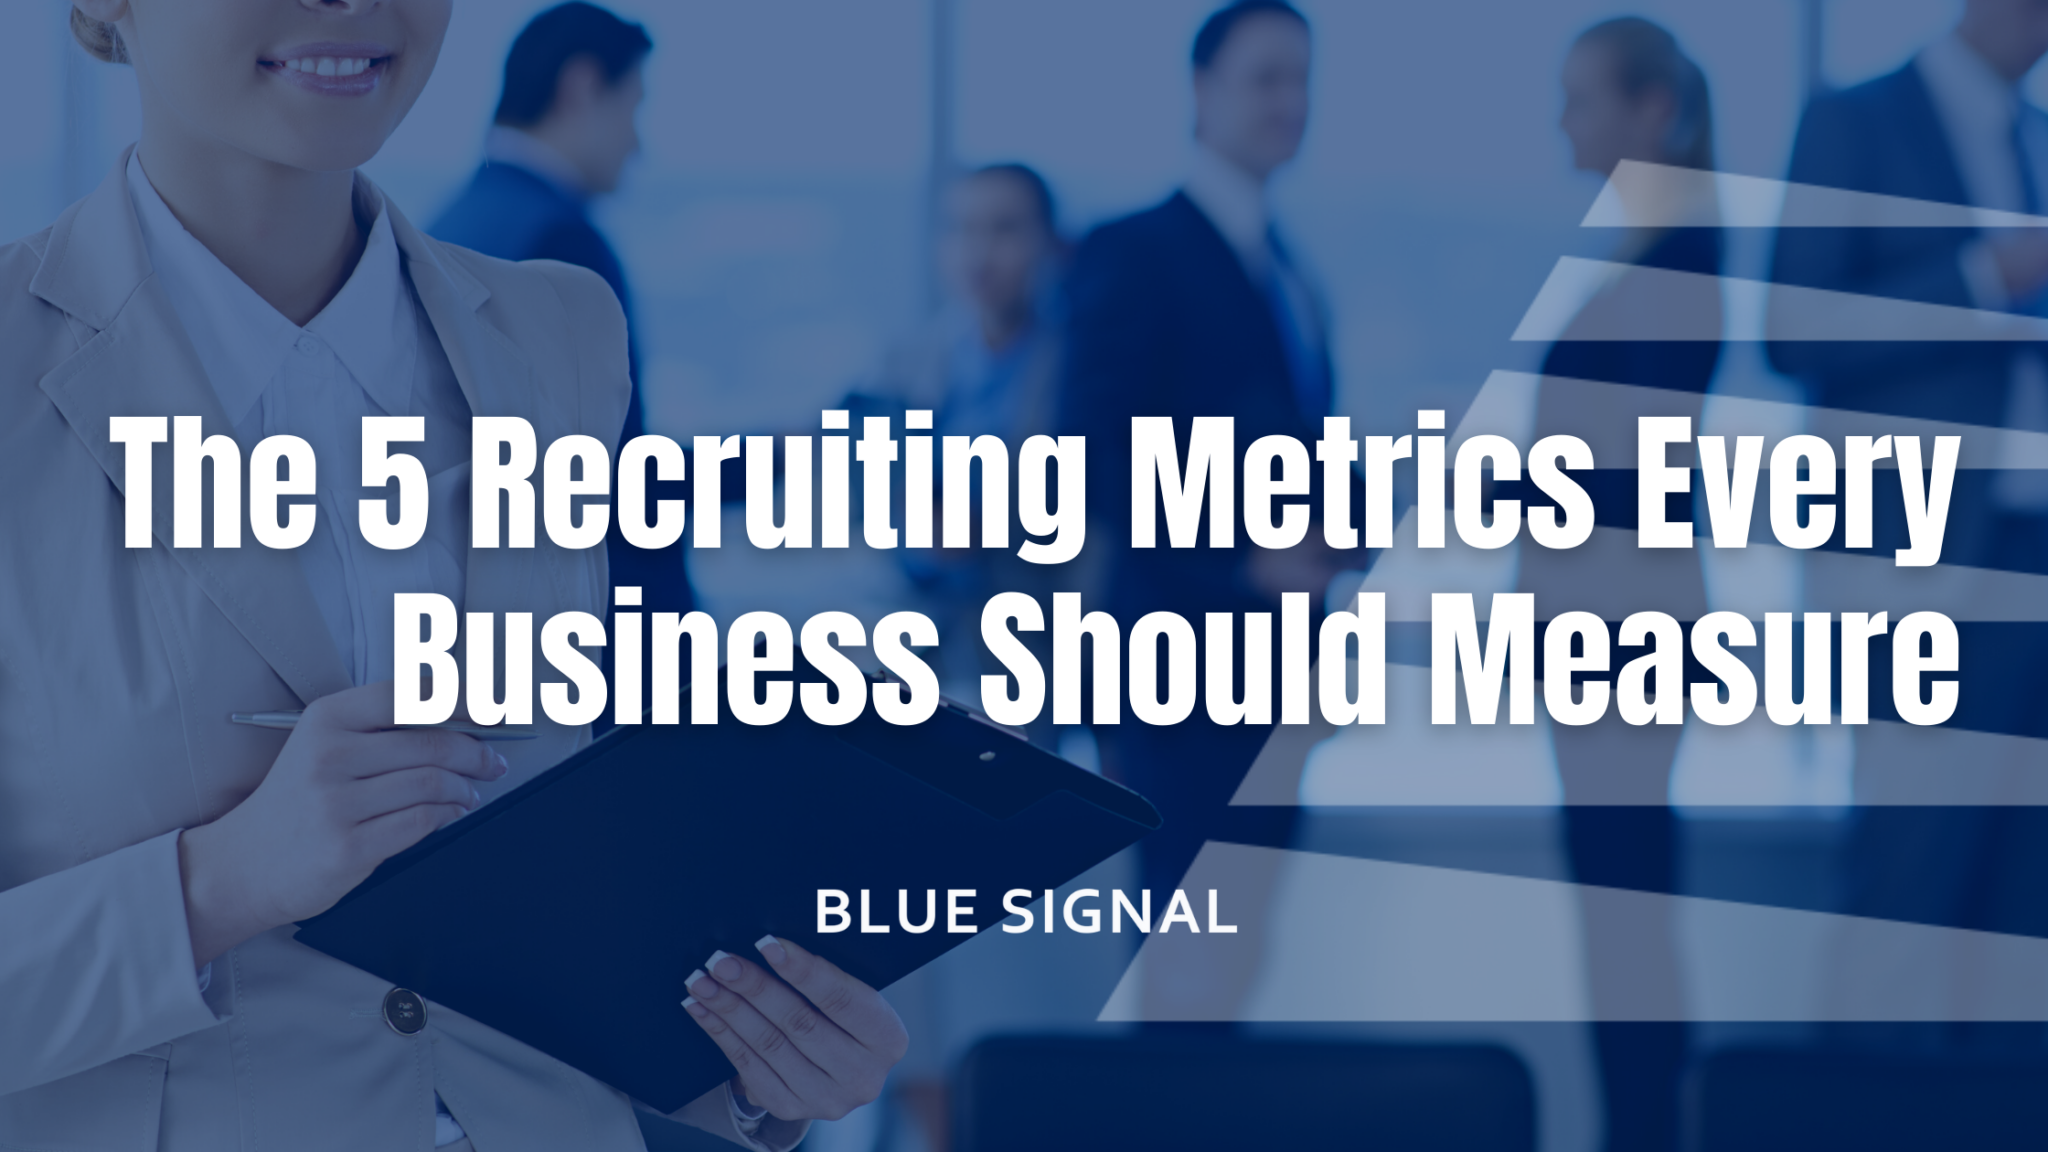 Recruiting Metrics Blog Cover